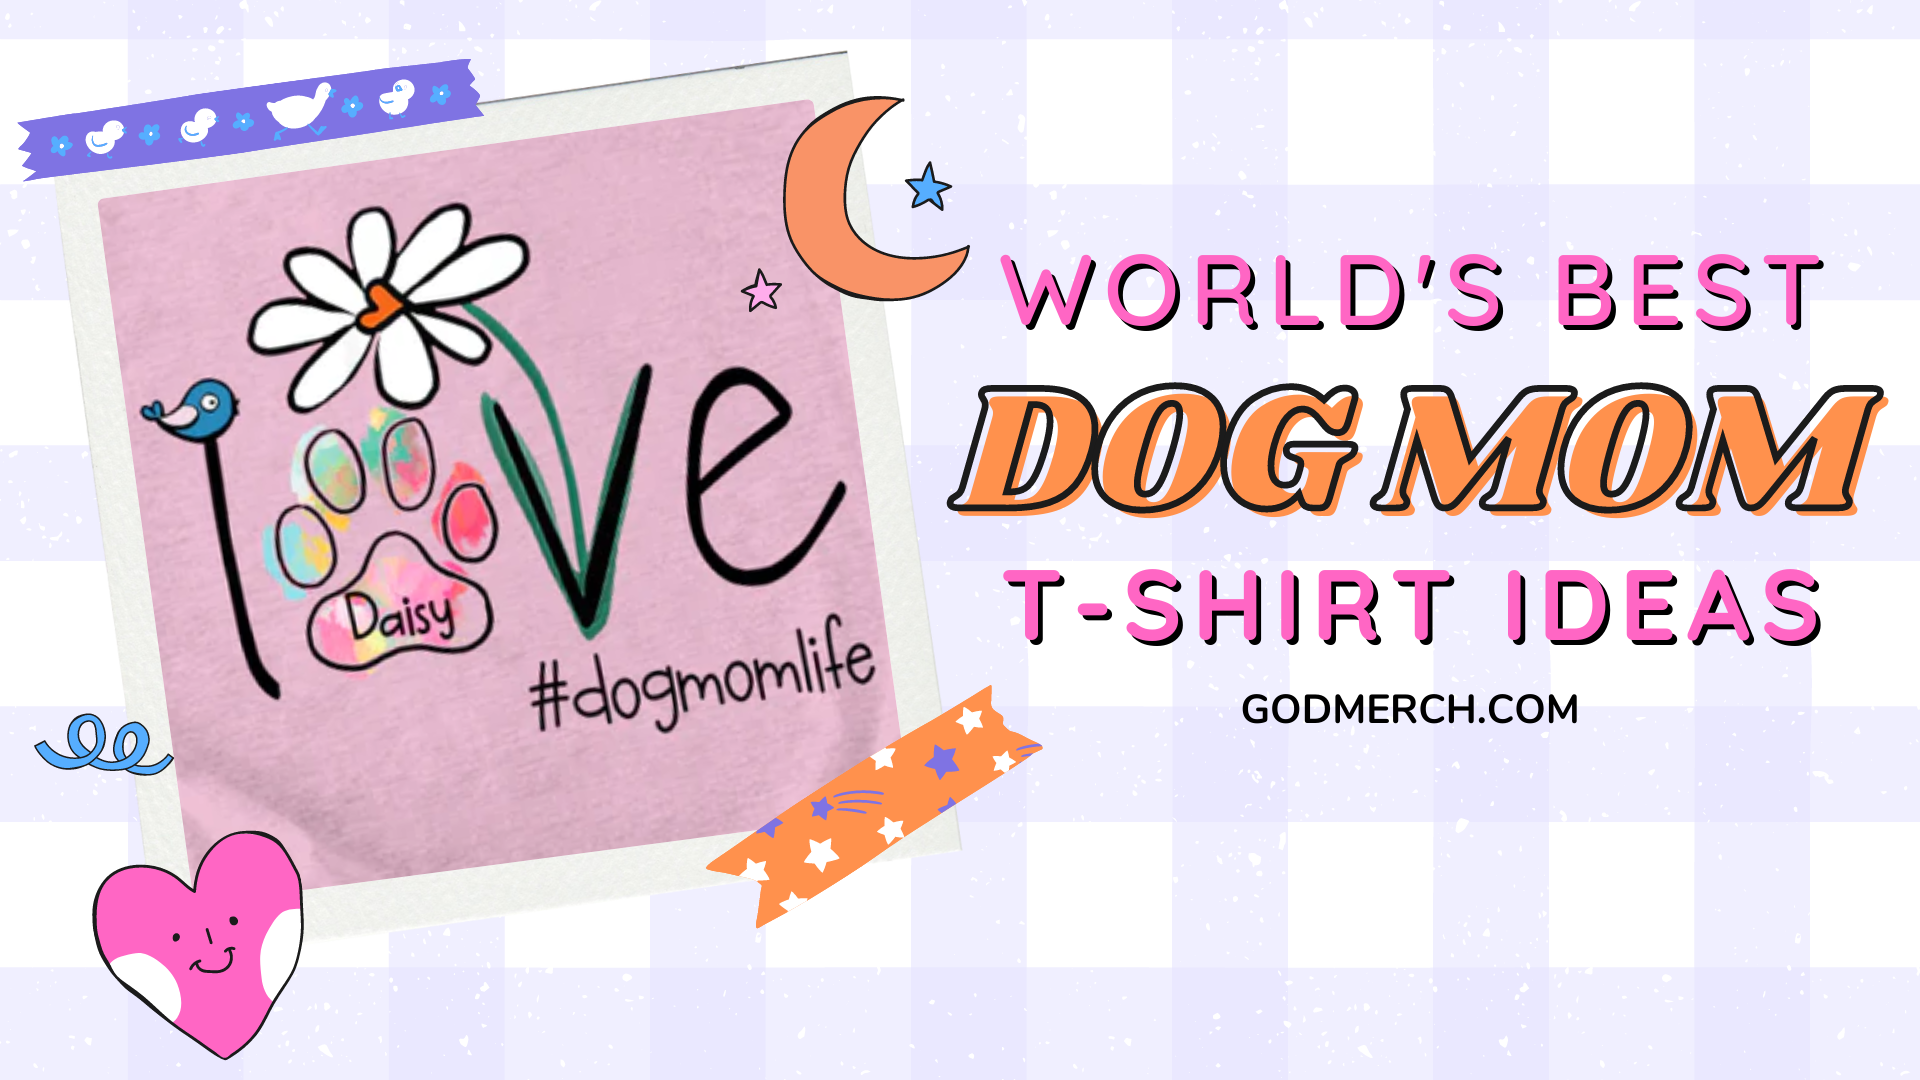 World's Best T-shirt Ideas for Dog Mom - Best Deal & Unique Designs